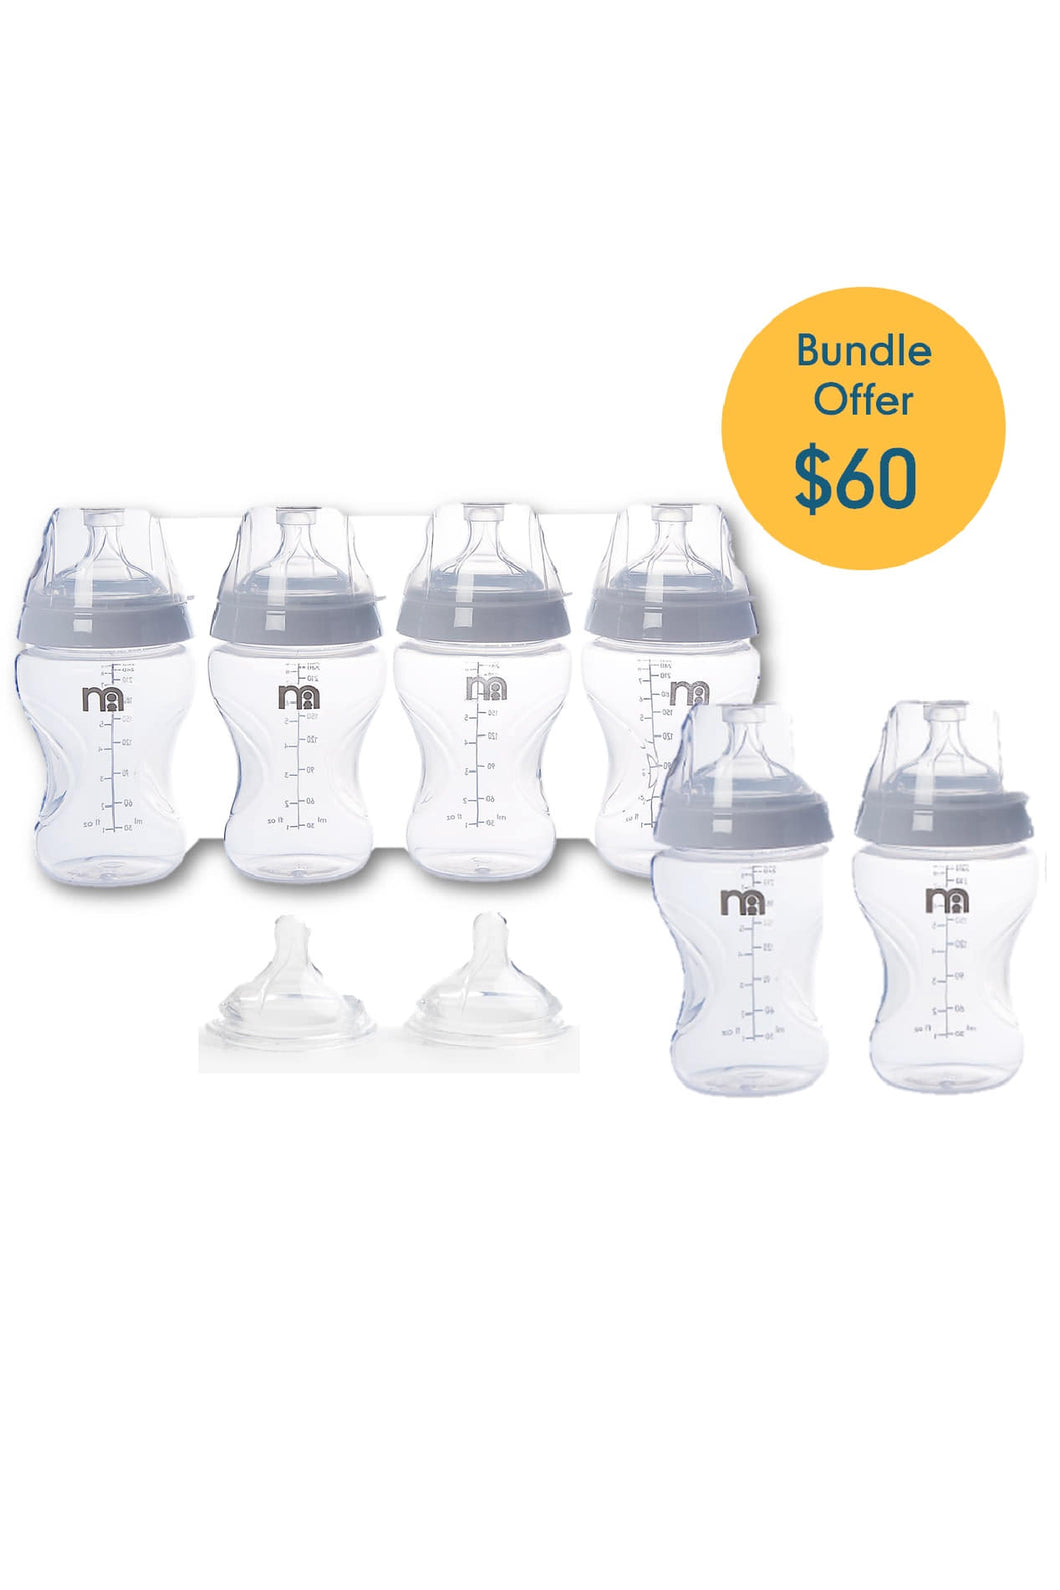 Mothercare Natural Shape Anti Colic Bottles Bundle (Total Save $260)